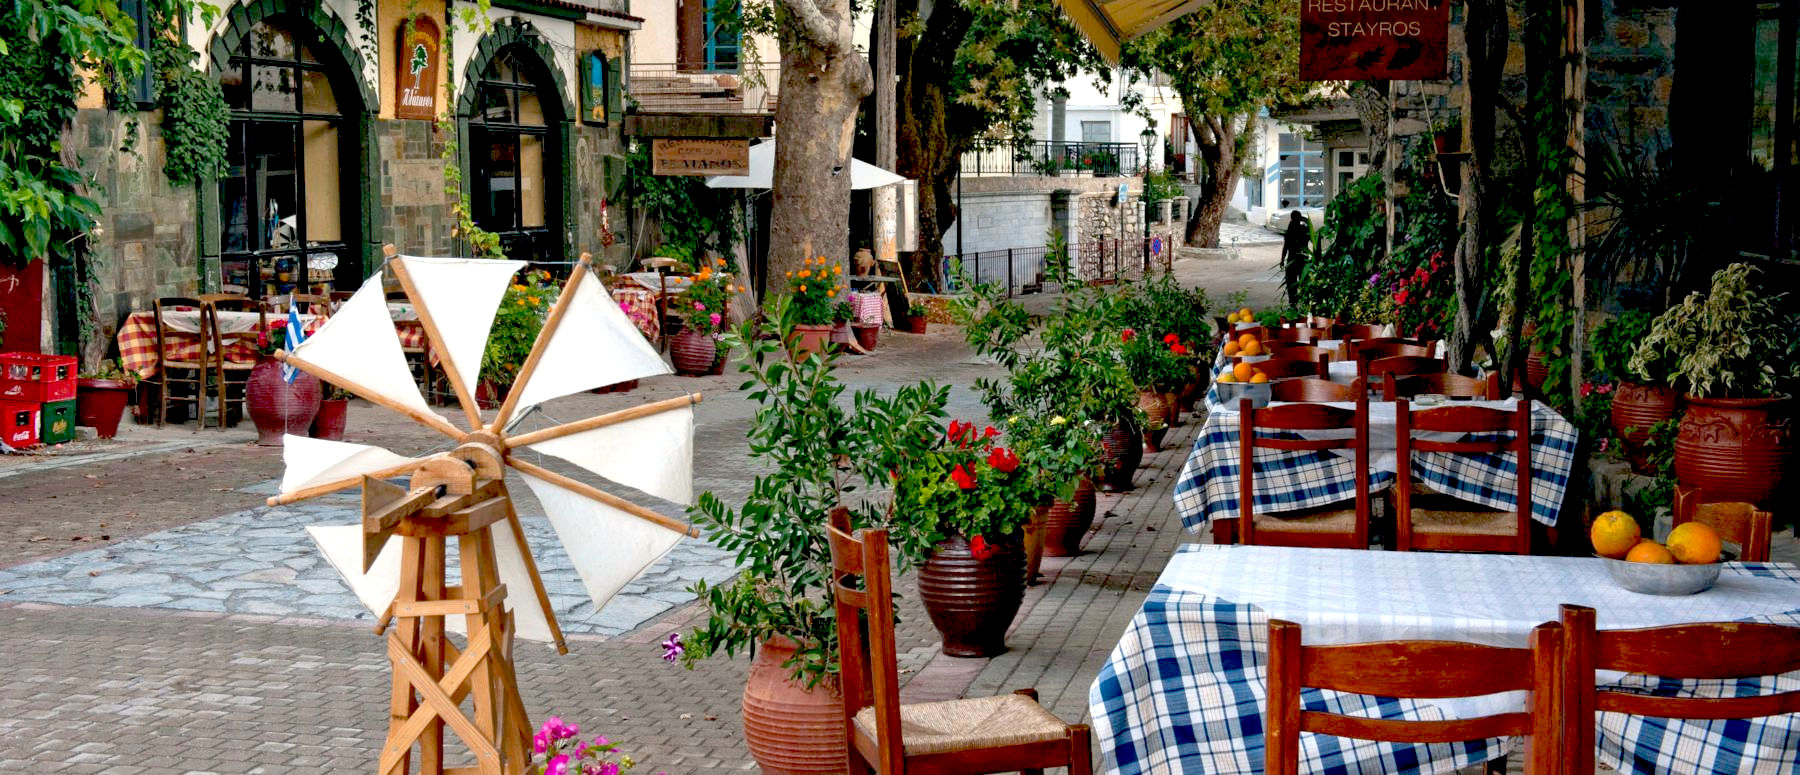 Crete Lasithi Psihro Village street with taverns